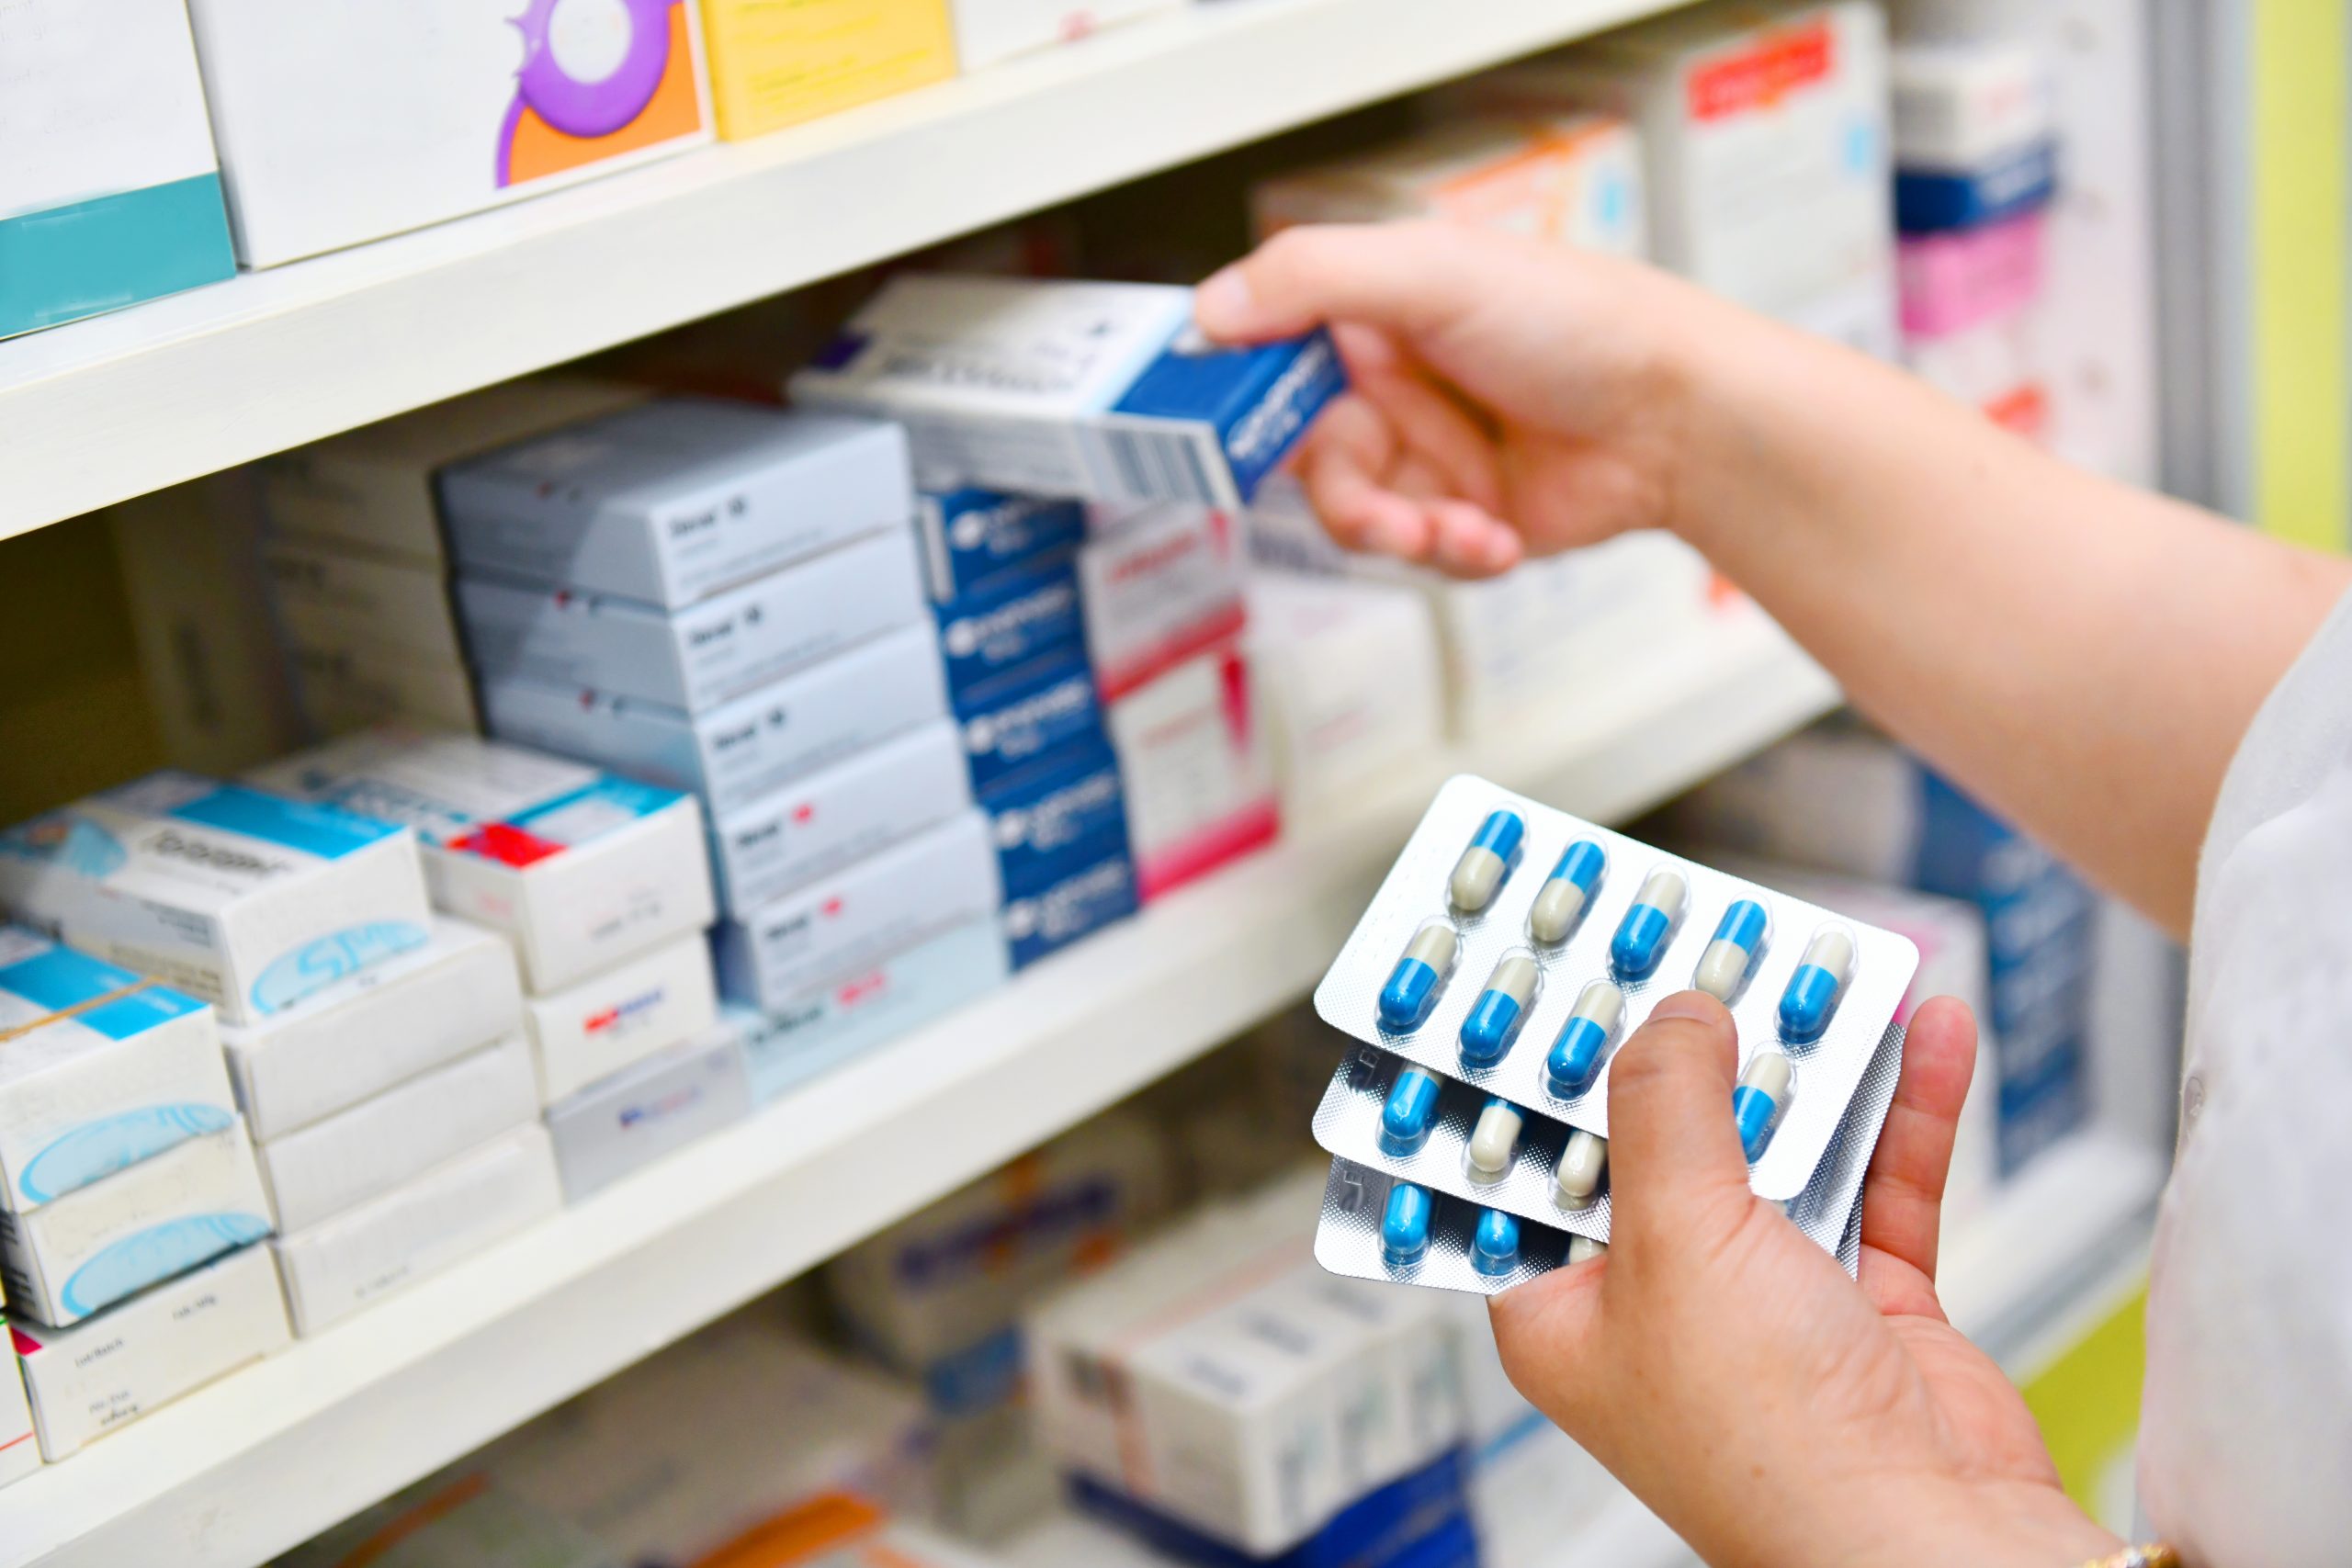 Price Check Experiment: Are generic drugs worth it? - Squawkfox